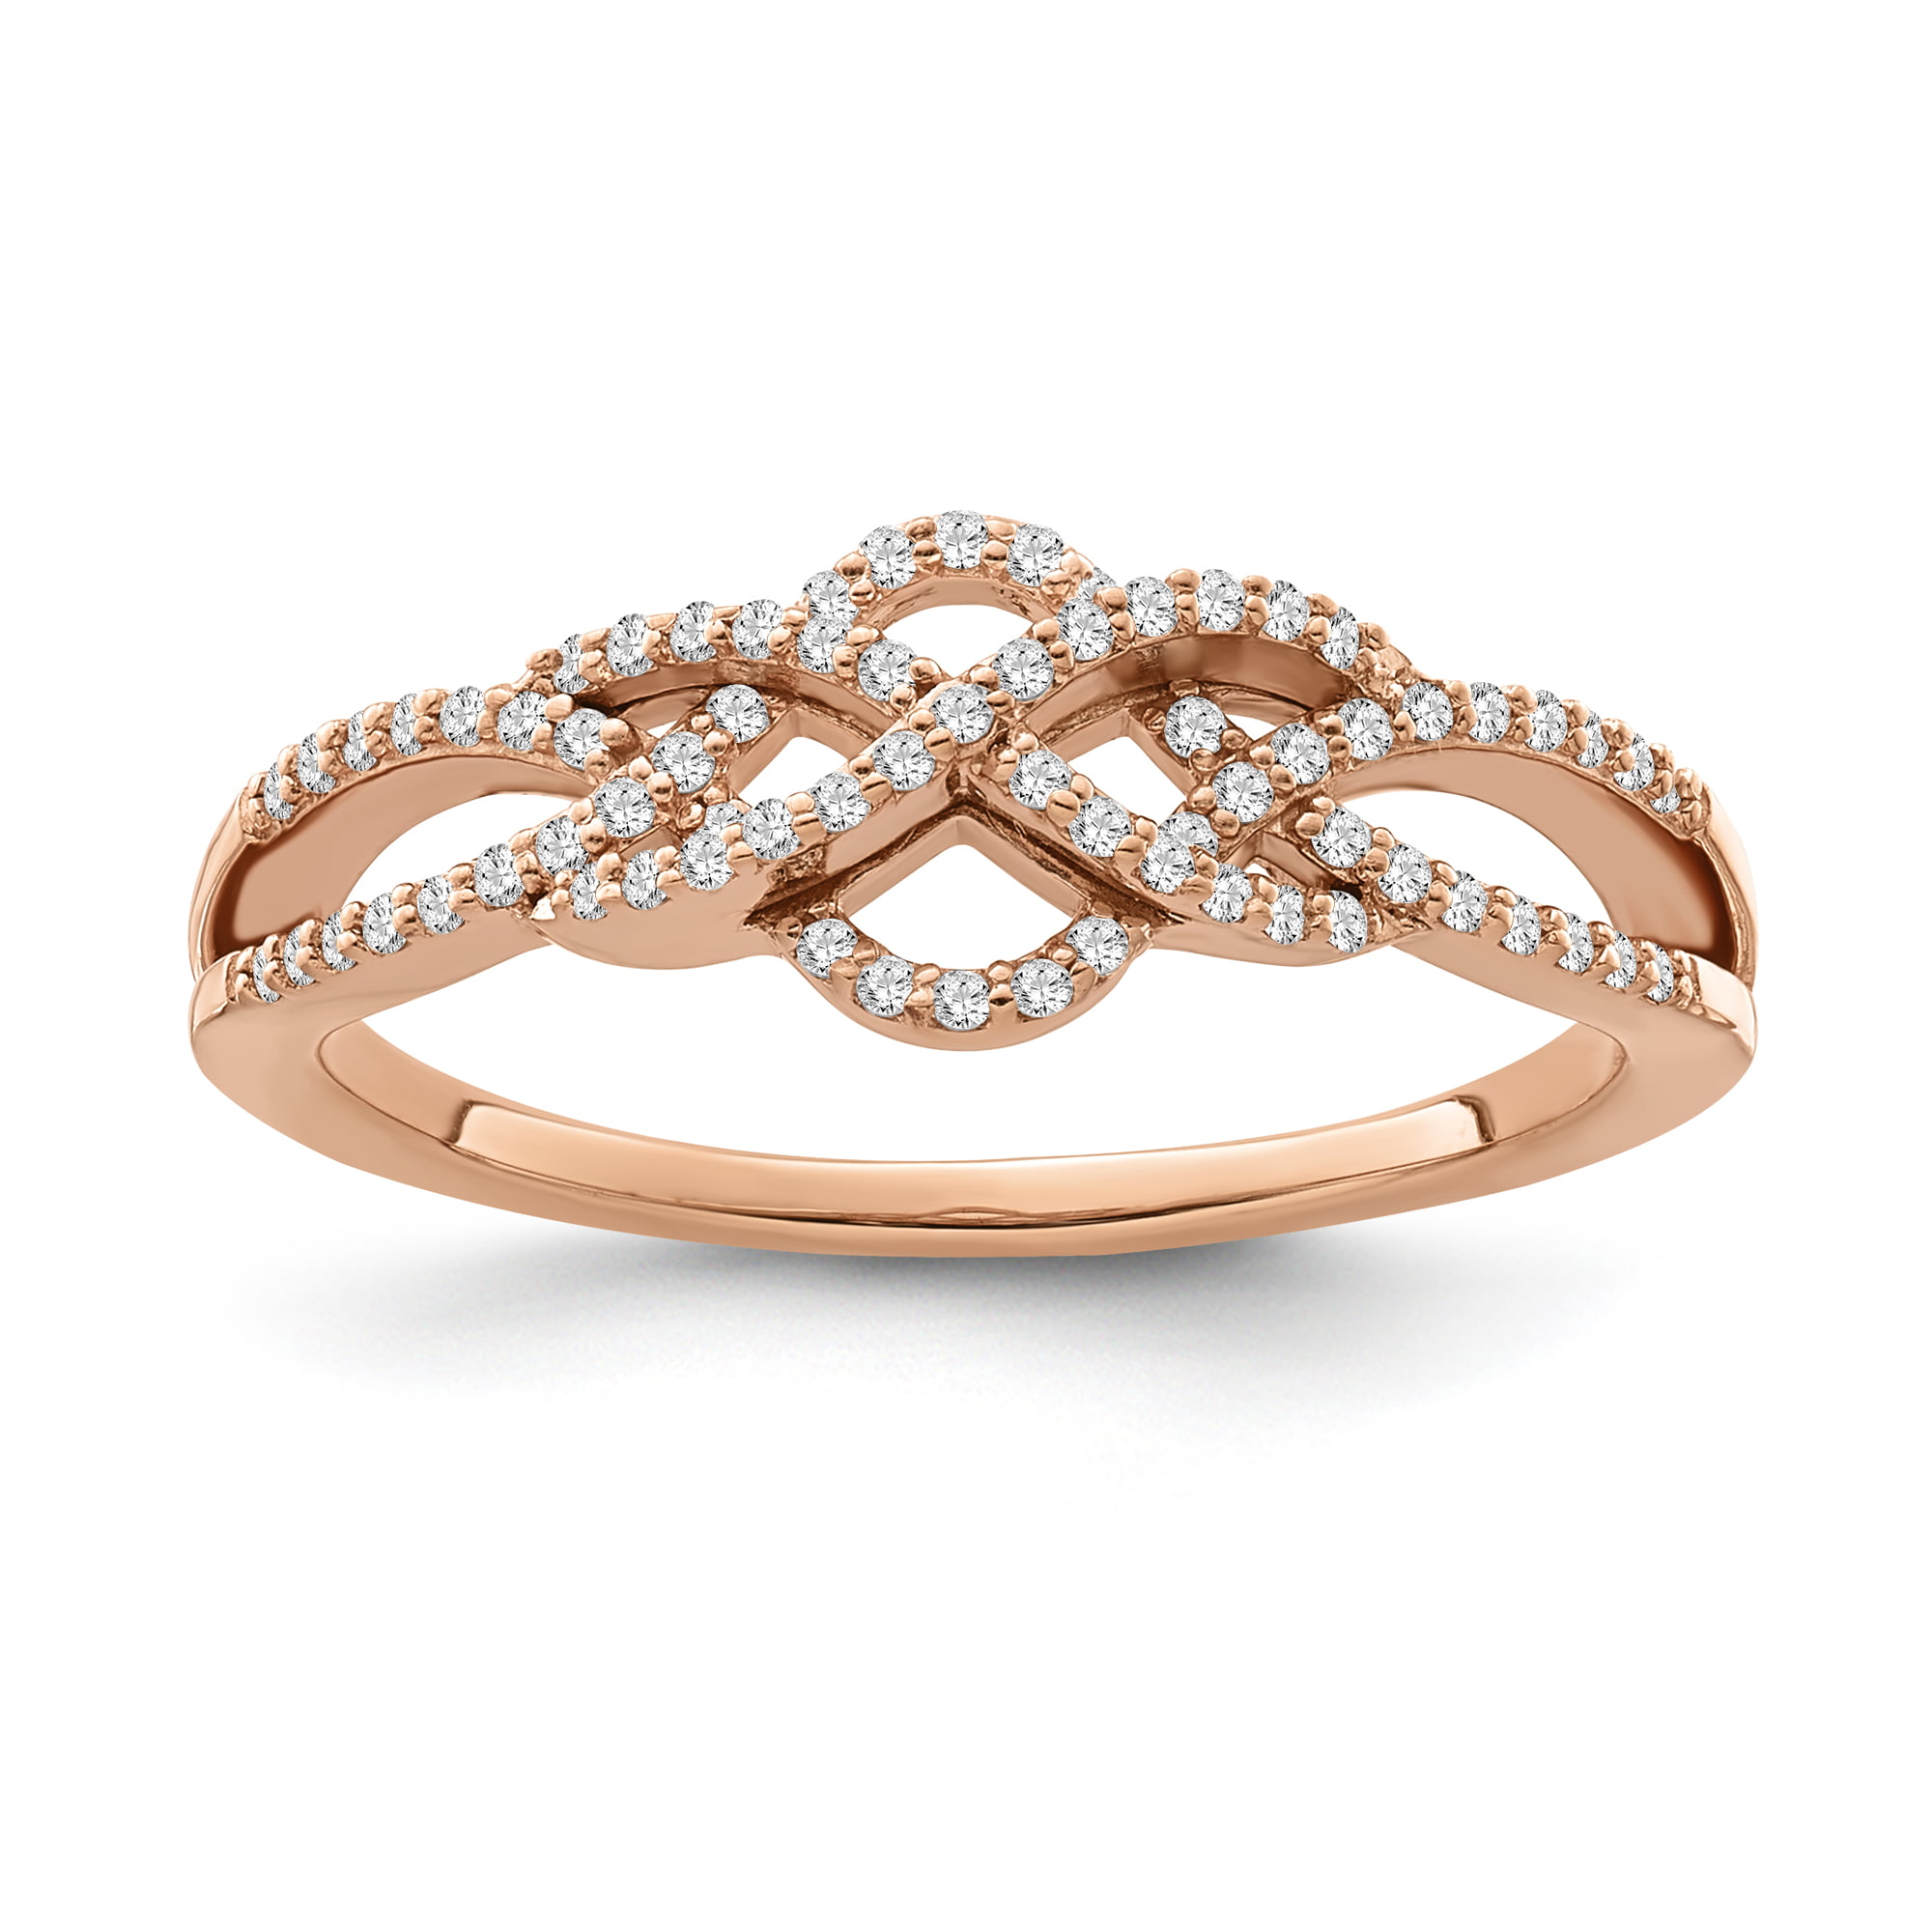 10k White Gold Infinity Diamond Anniversary Ring 1/4 cttw, I-J Color, I2-I3 Clarity